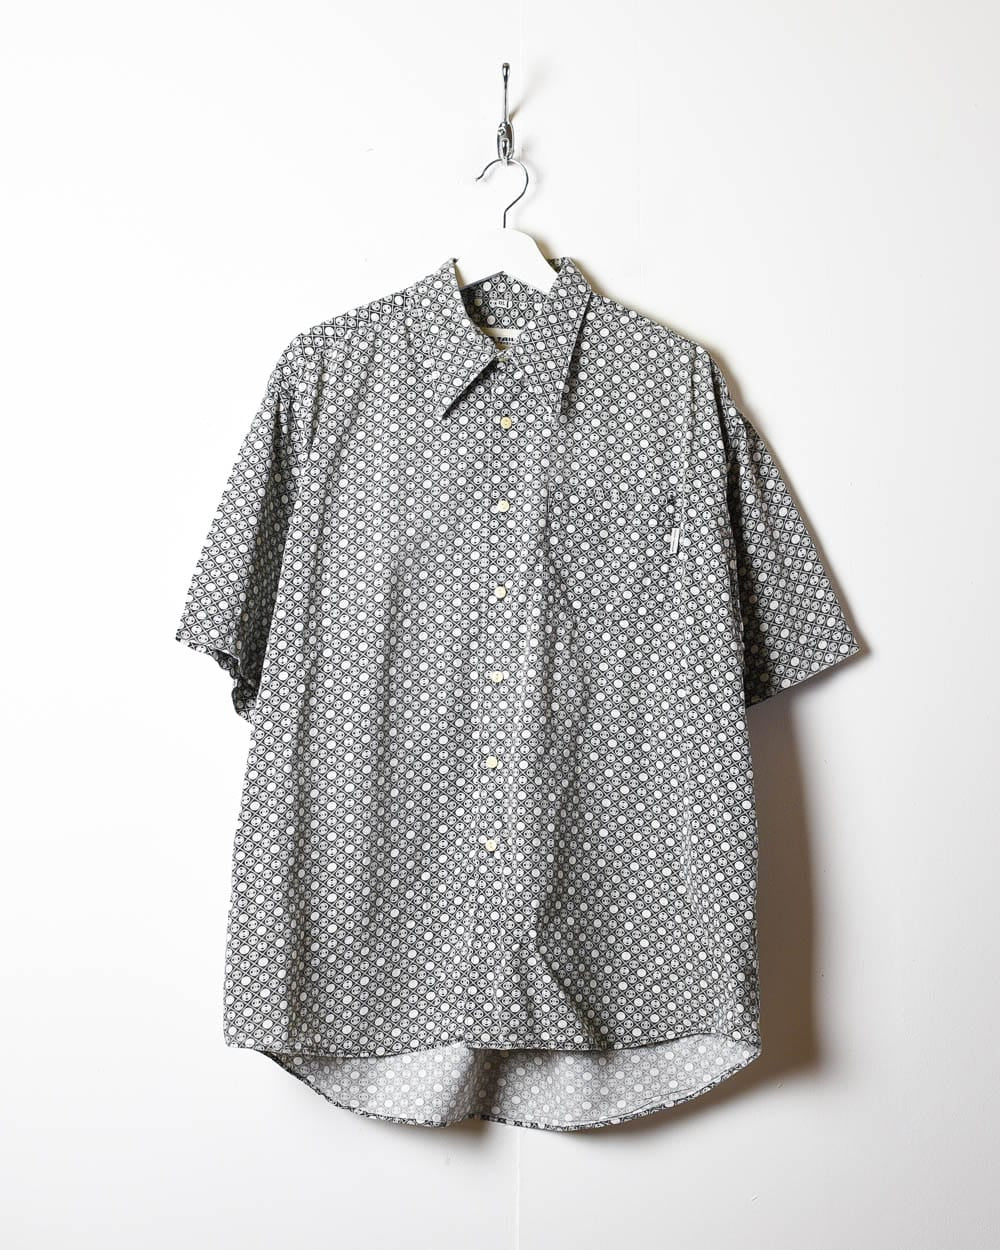 Black Patterned All-Over Print Short Sleeved Shirt - XX-Large